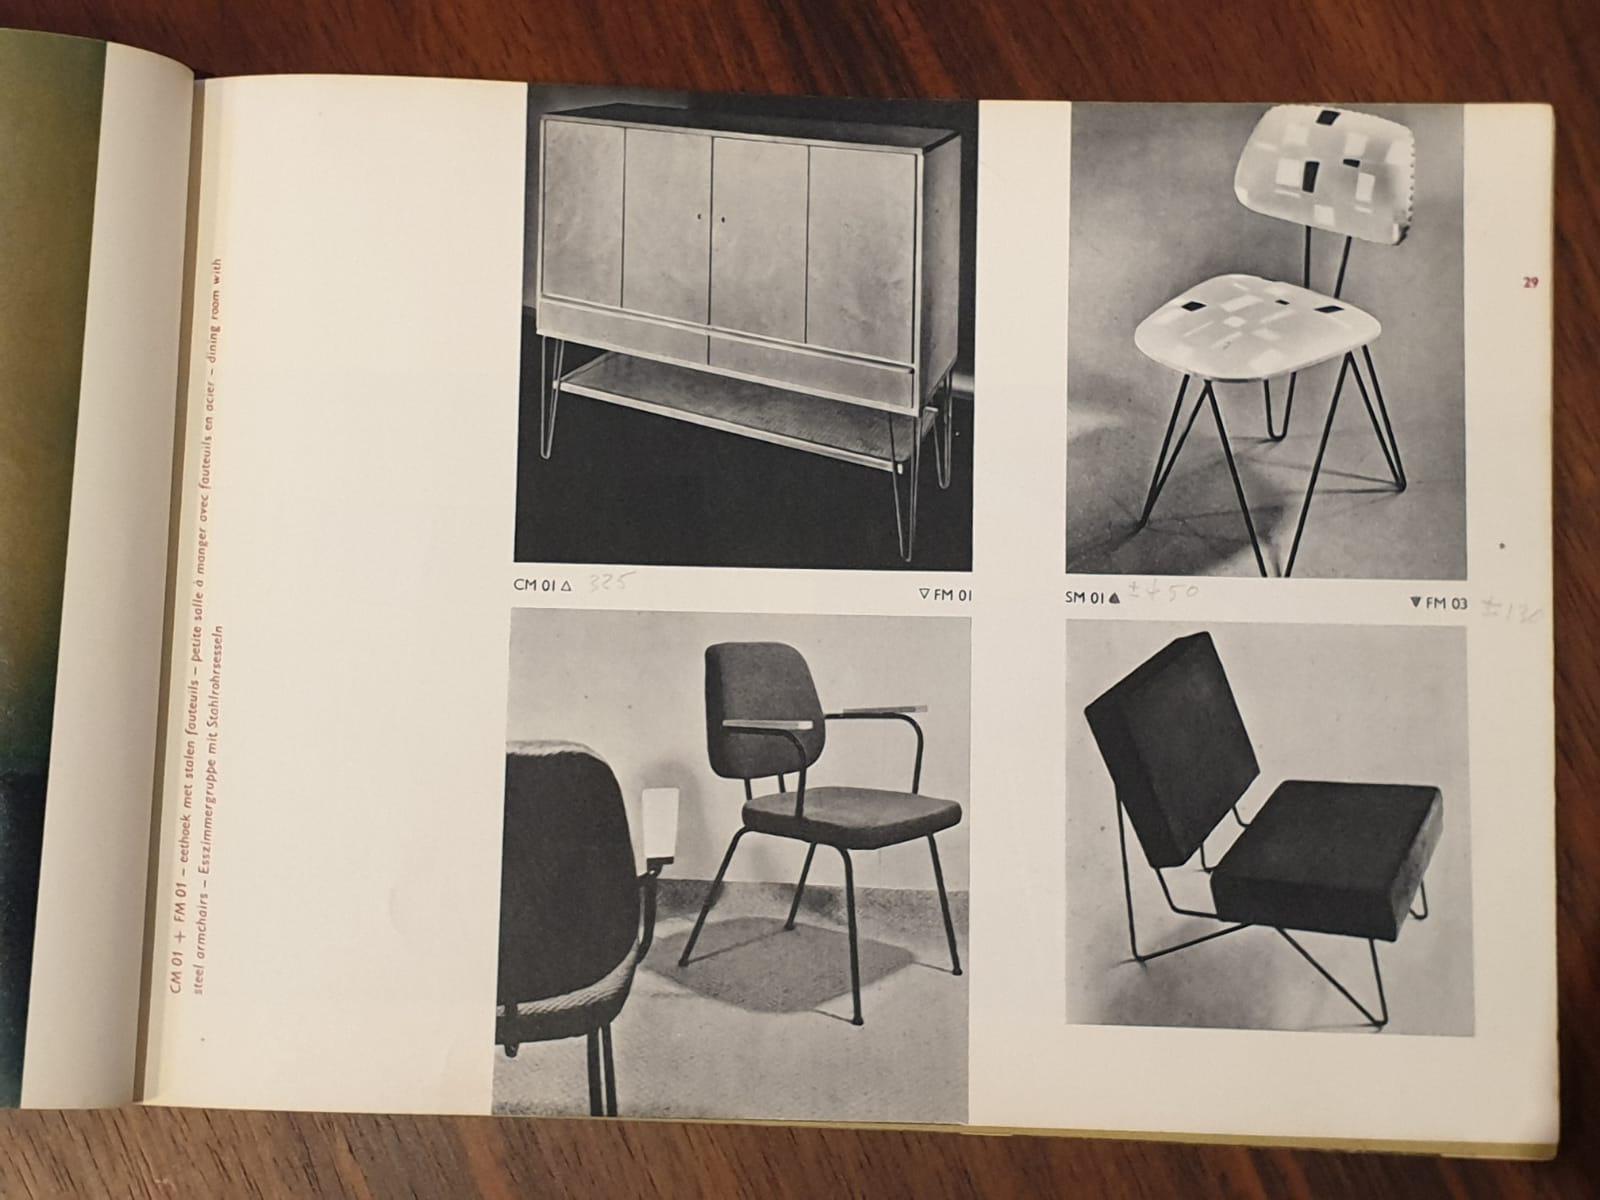 Chaise minimaliste néerlandaise SM01 originale Pastoe de Cees Braakman, 1954 en vente 4